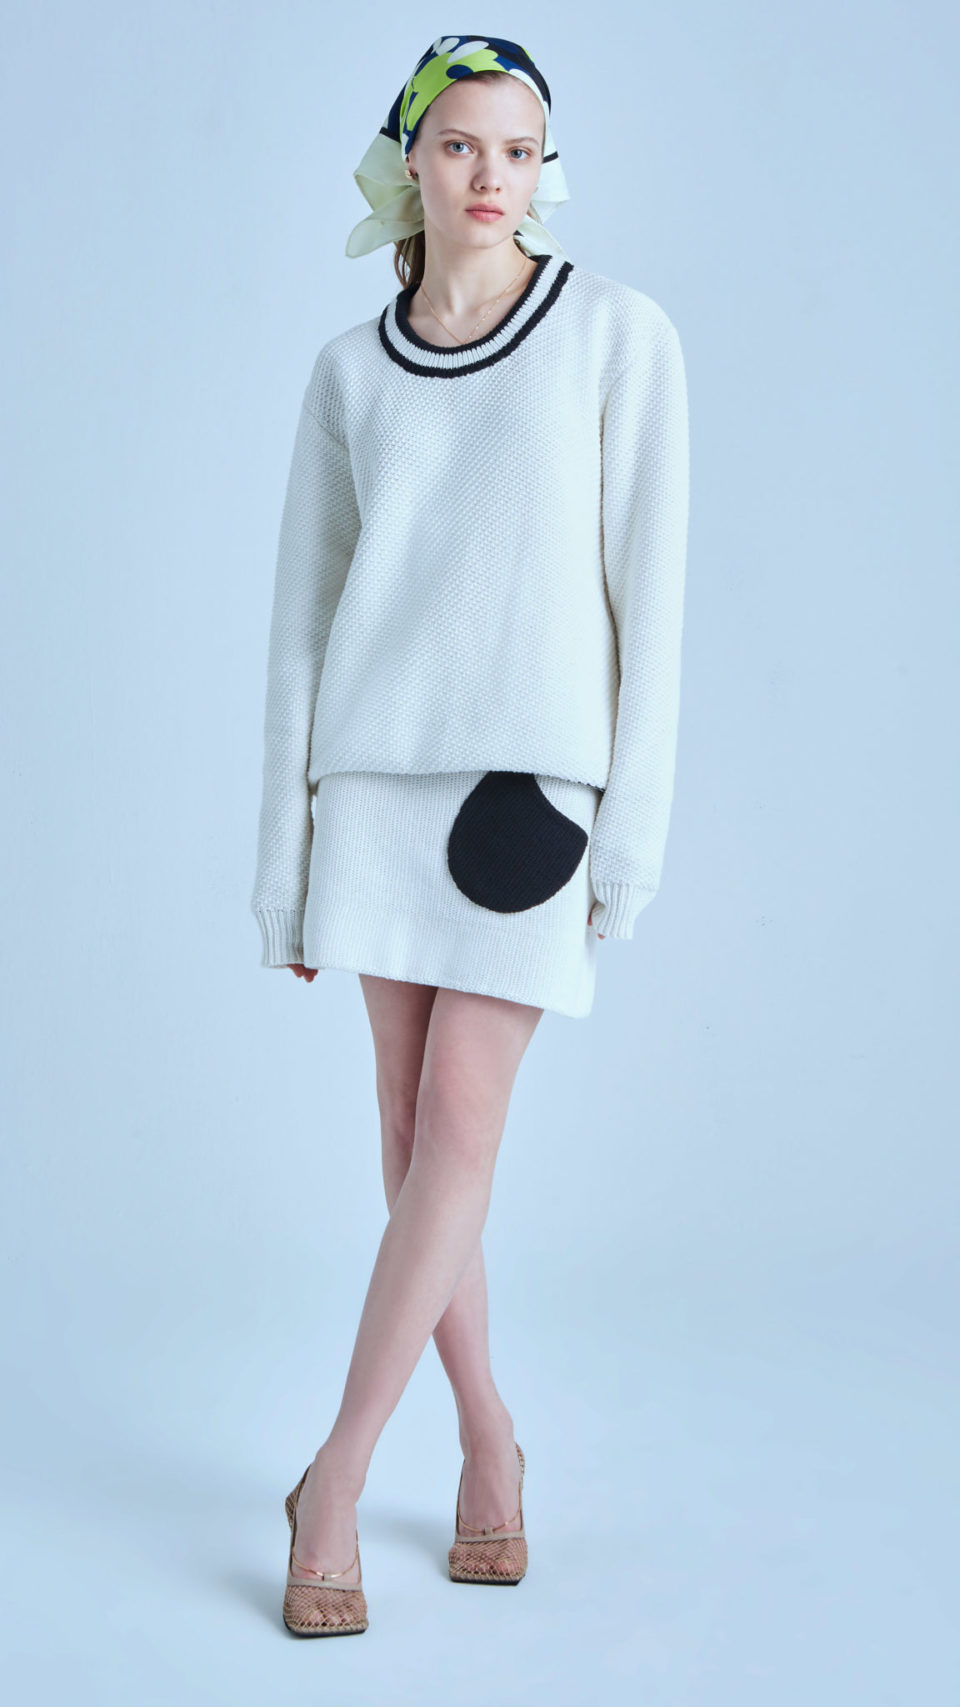 Cotton knit sweater from designer Maria Karimi - Spring summer 2021